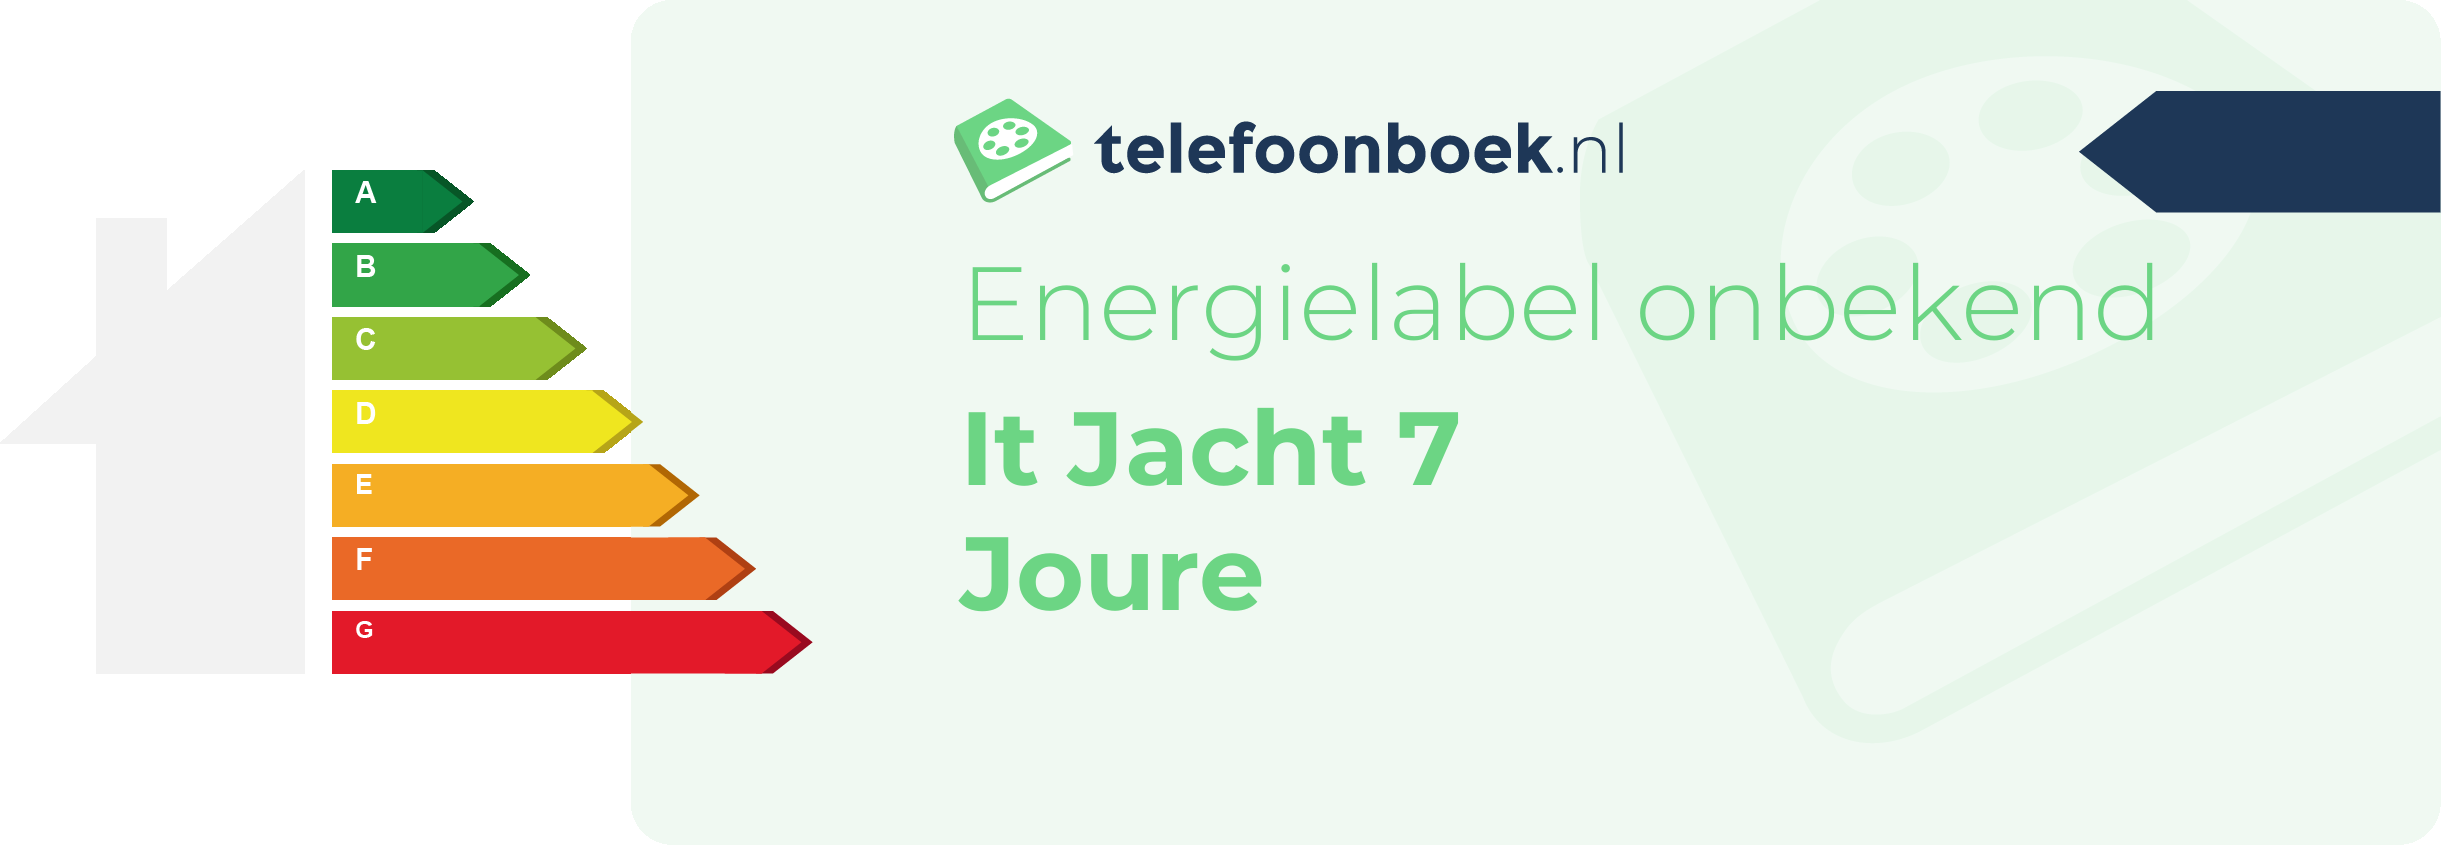 Energielabel It Jacht 7 Joure